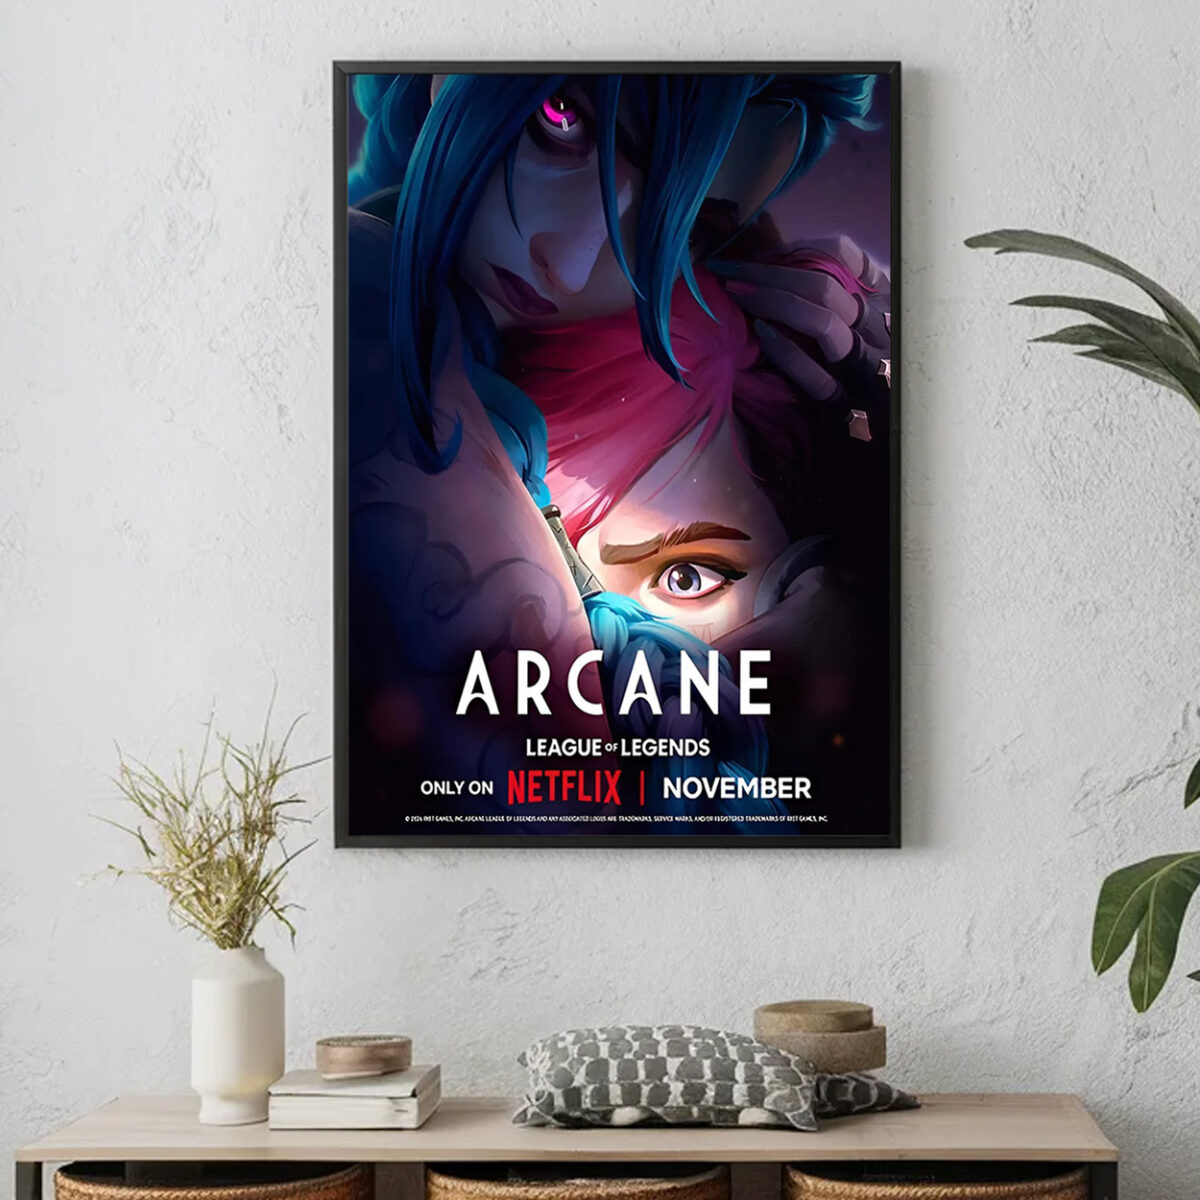 Arcane Season 2 Premiering On Netflix In November Poster